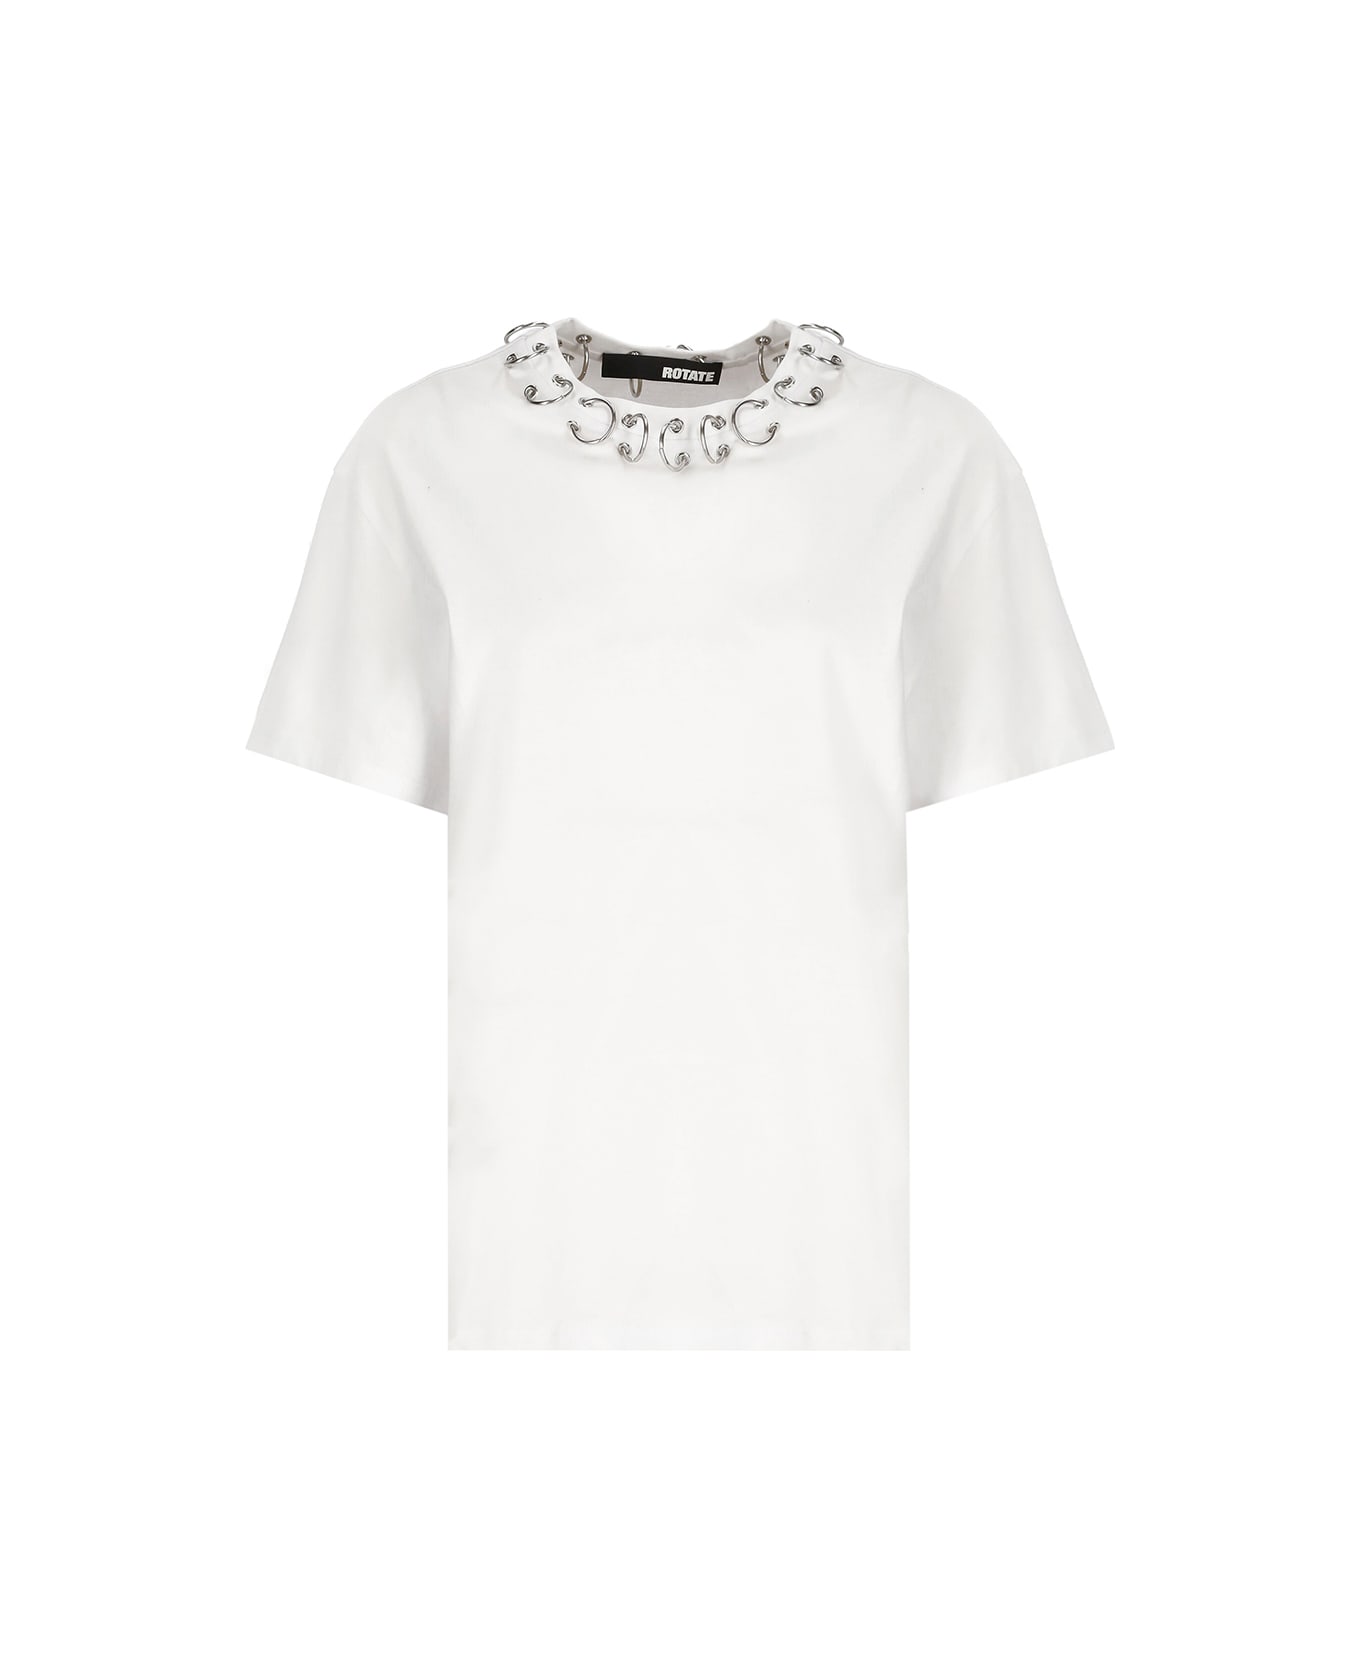 Rotate by Birger Christensen Oversize Ring T-shirt - White